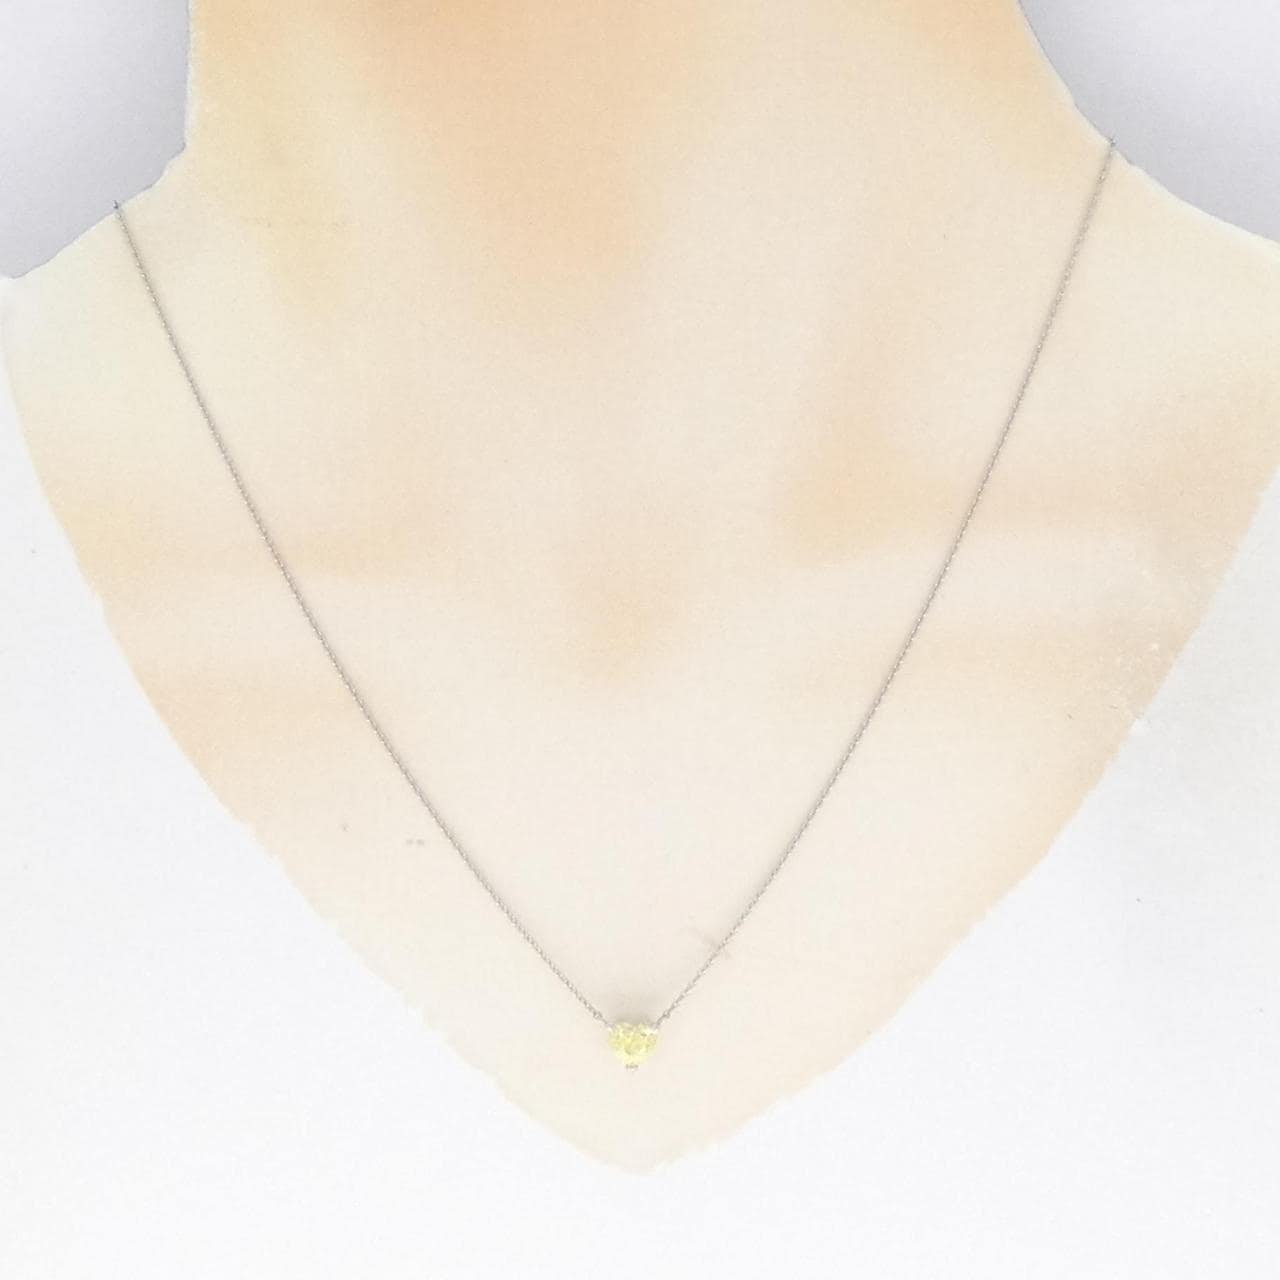 [Remake] PT Diamond Necklace 1.010CT FIY SI2 Fancy Cut